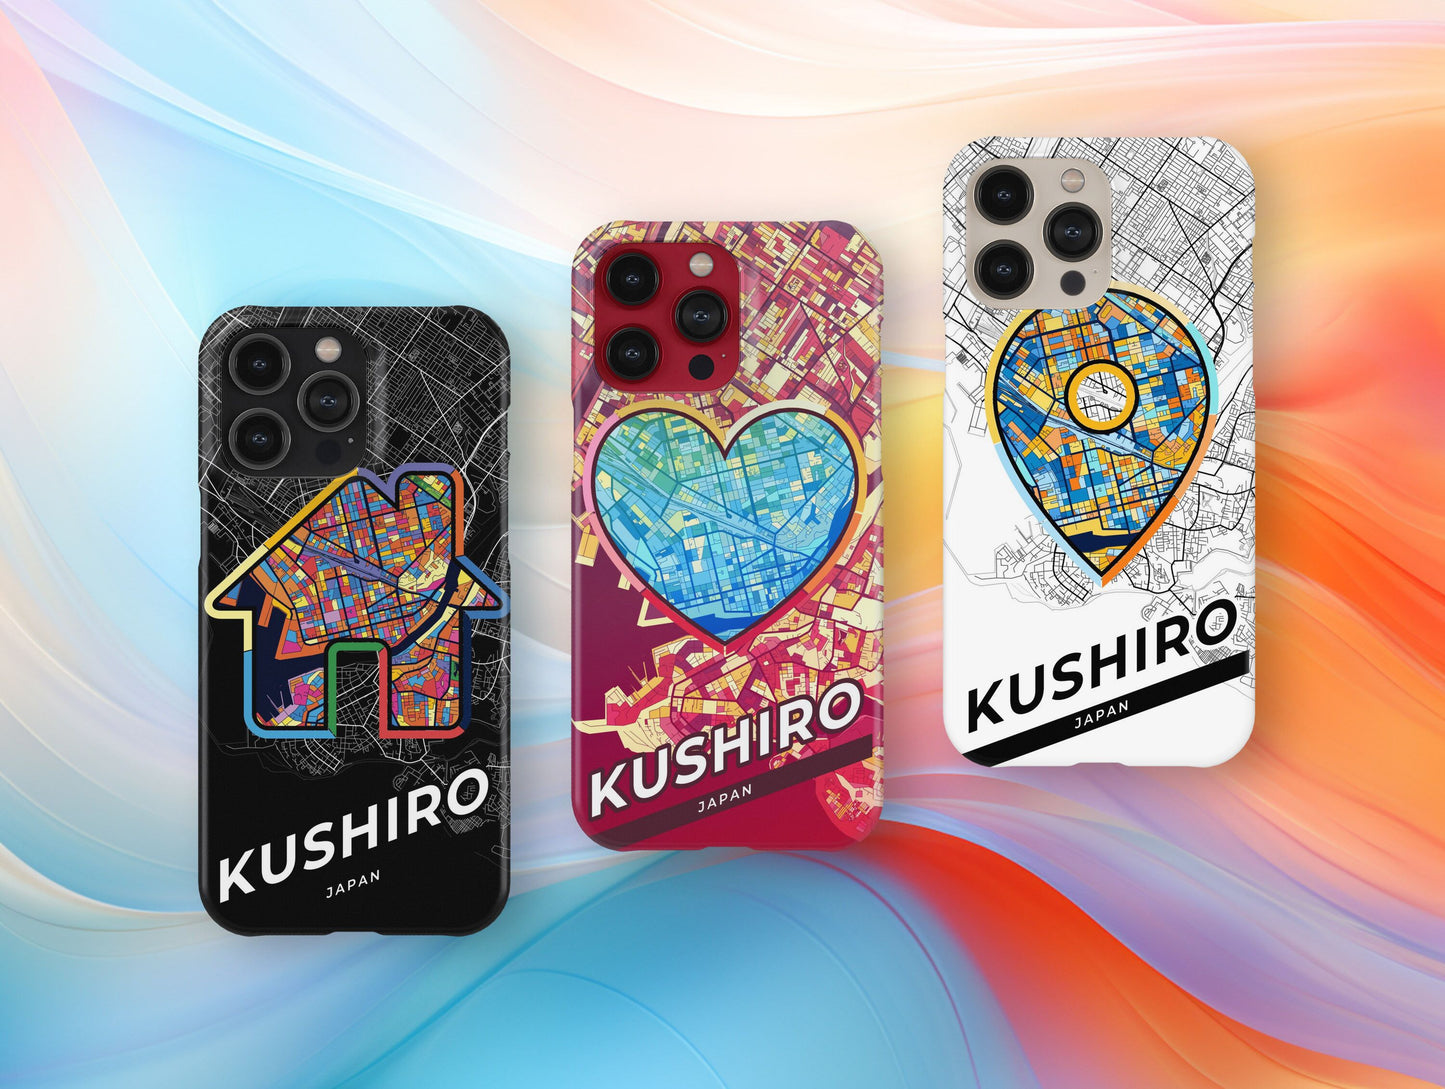 Kushiro Japan slim phone case with colorful icon. Birthday, wedding or housewarming gift. Couple match cases.